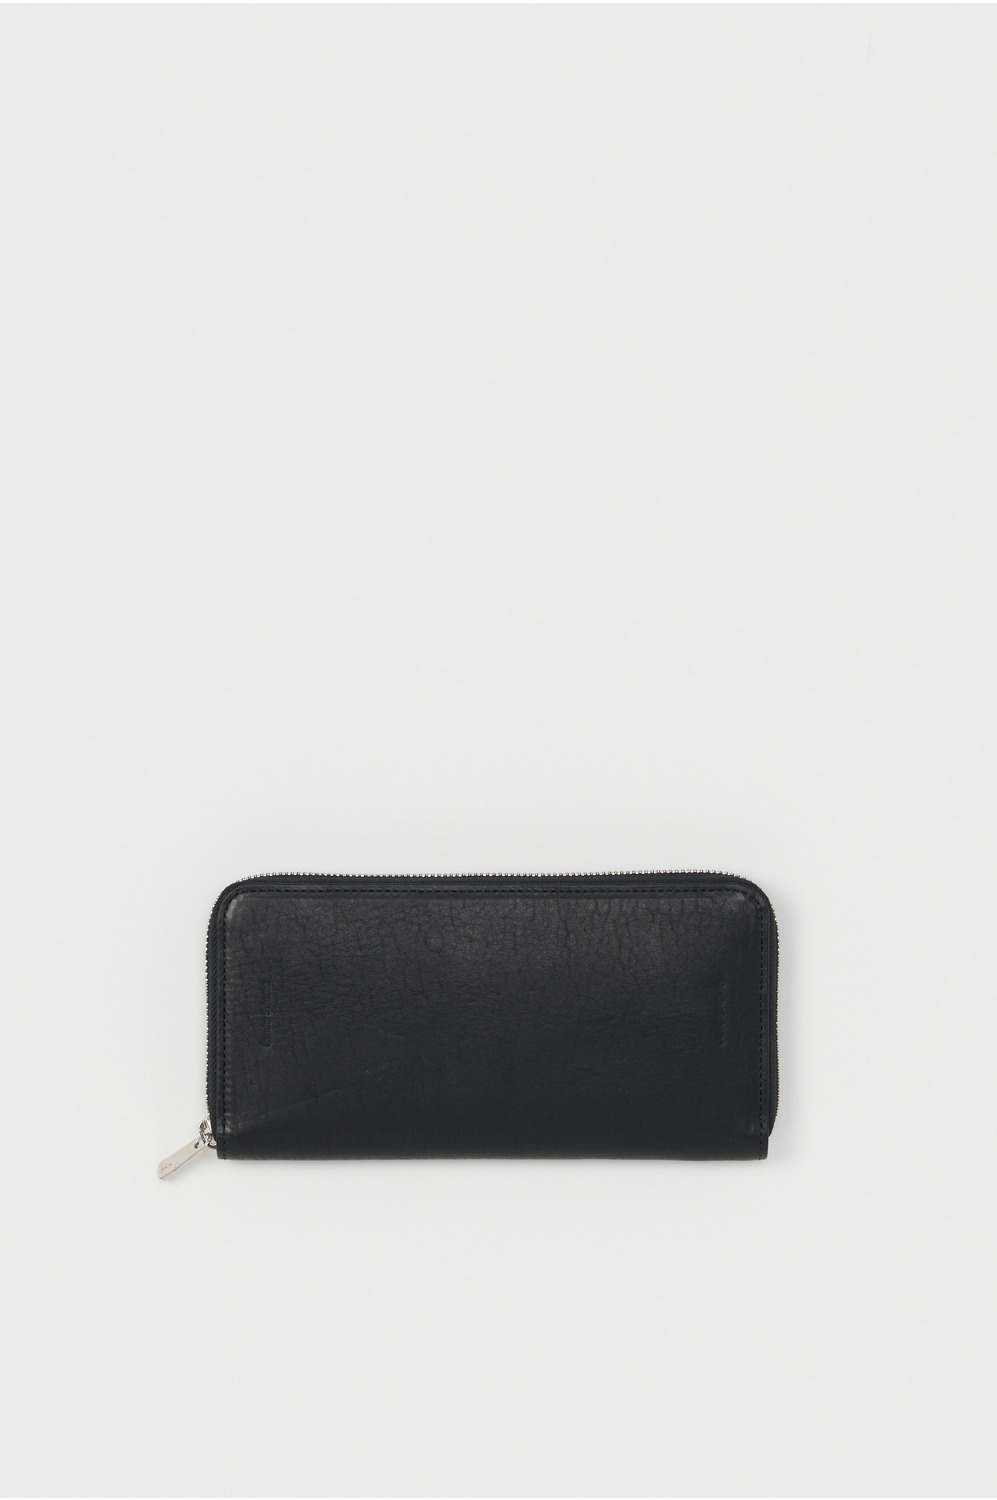 long zip purse 詳細画像 black 1